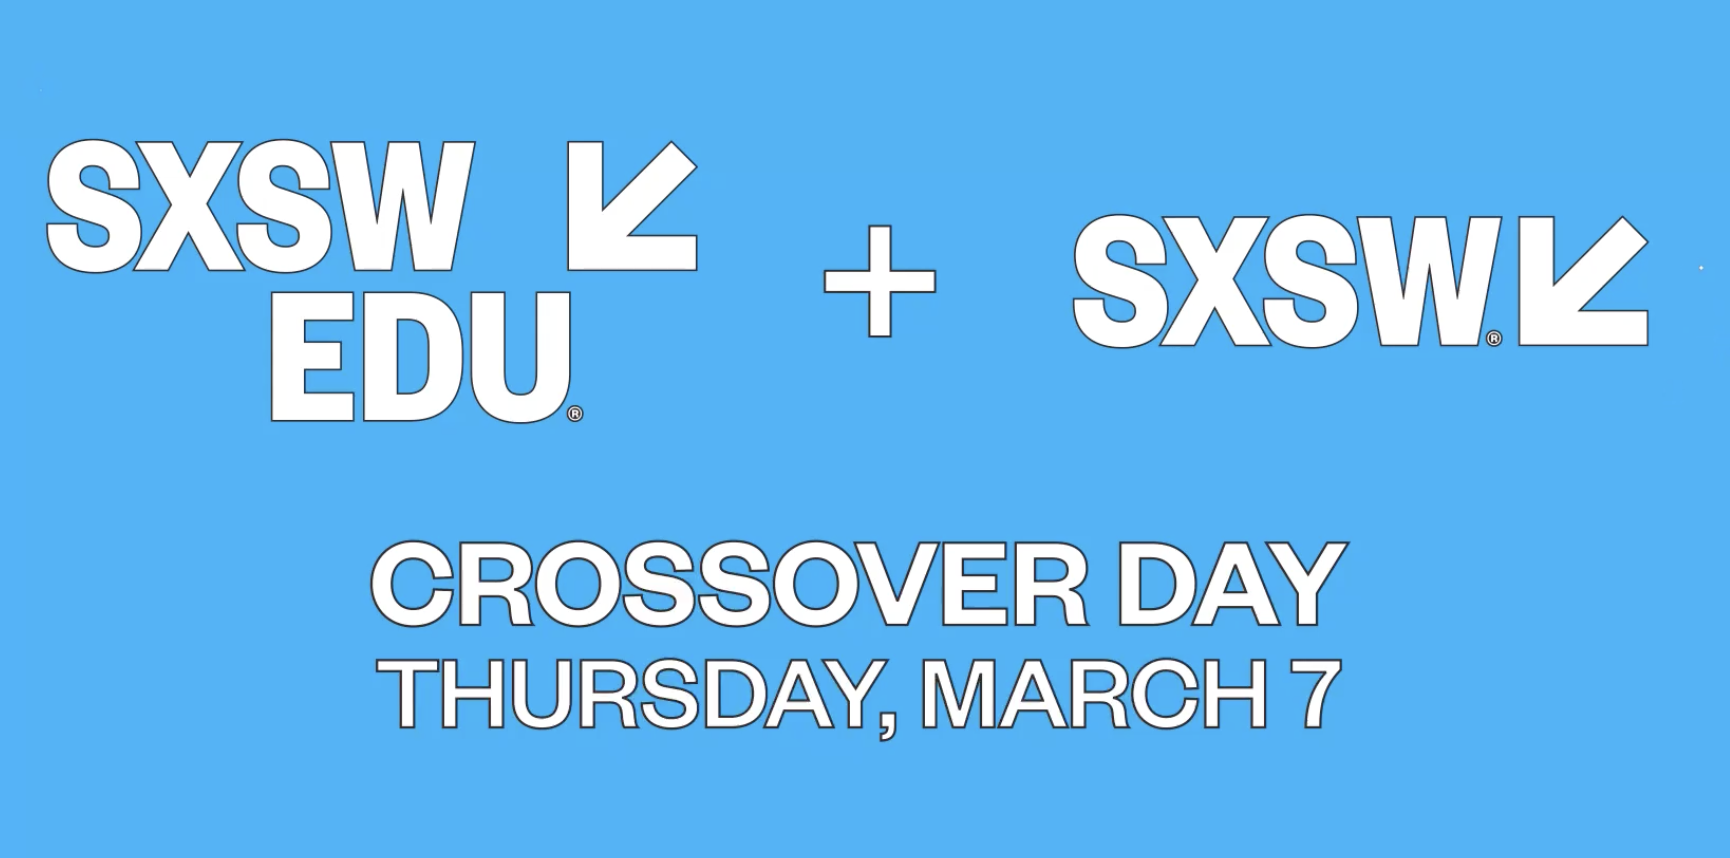 Crossover Day | SXSW and SXSW EDU